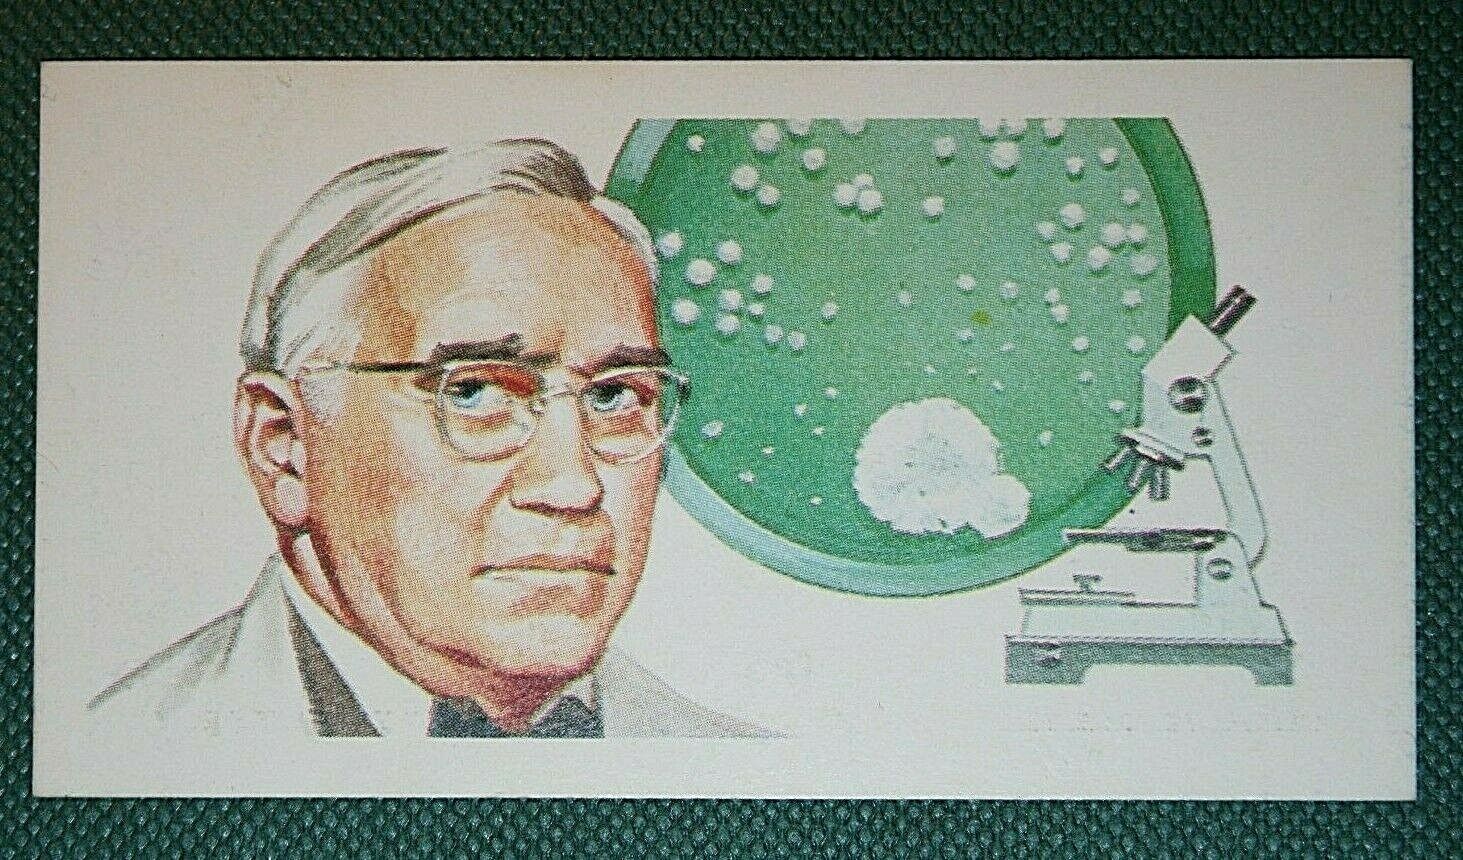 SIR ALEXANDER FLEMING   Penicillin Discoverer   Medical Tribute Card  XC28